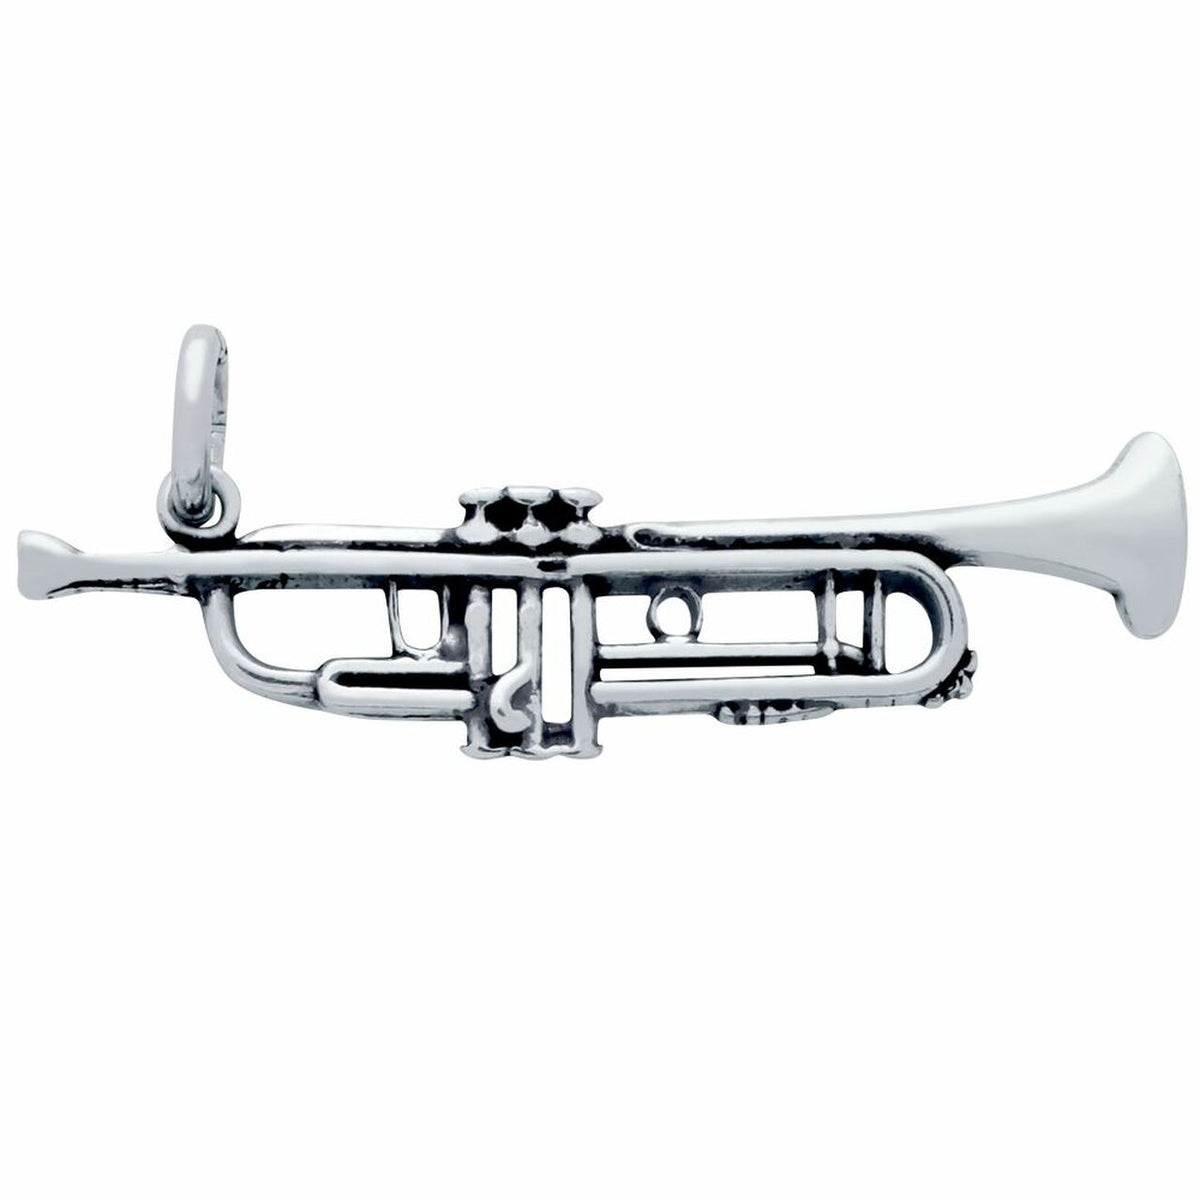 Silver Trumpet Charm